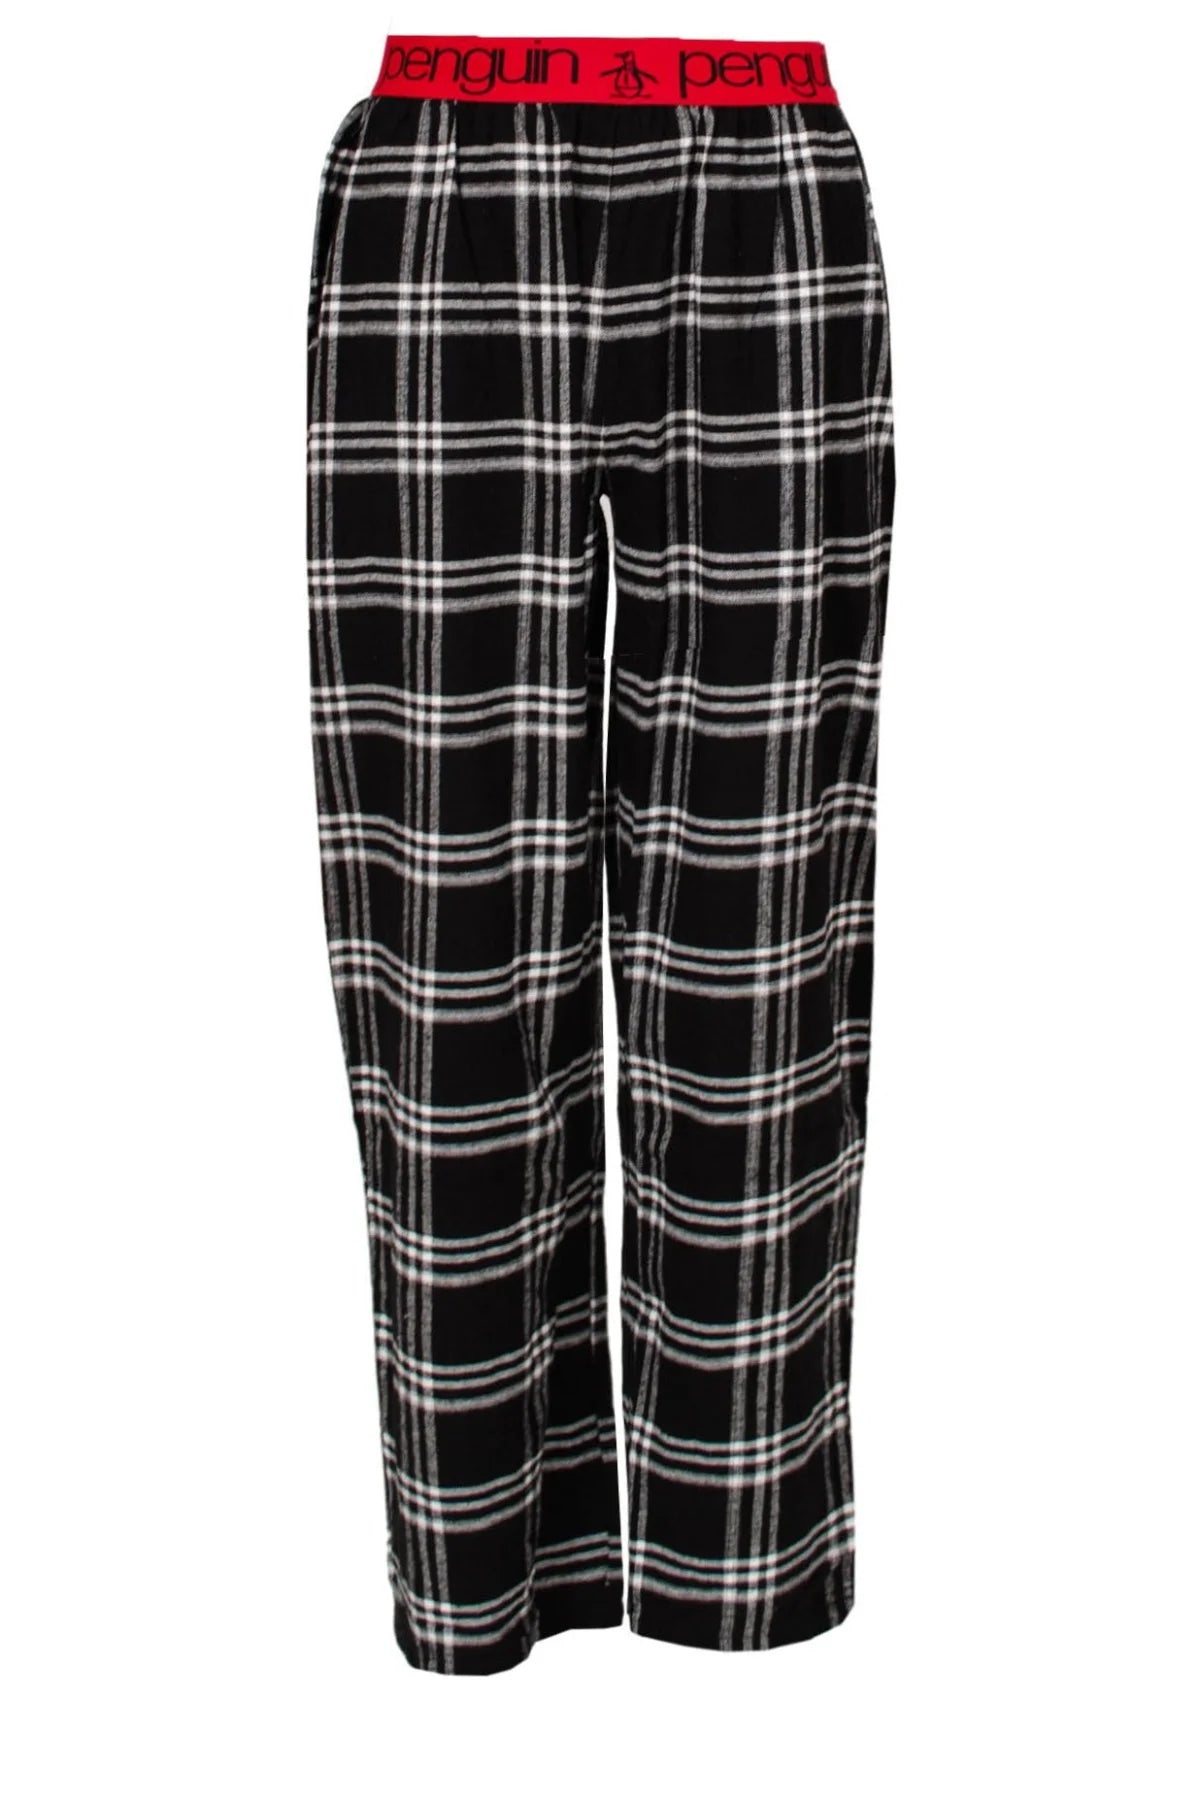 Penguin Cotton Check Pyjama Lounge Pants Black/White / S